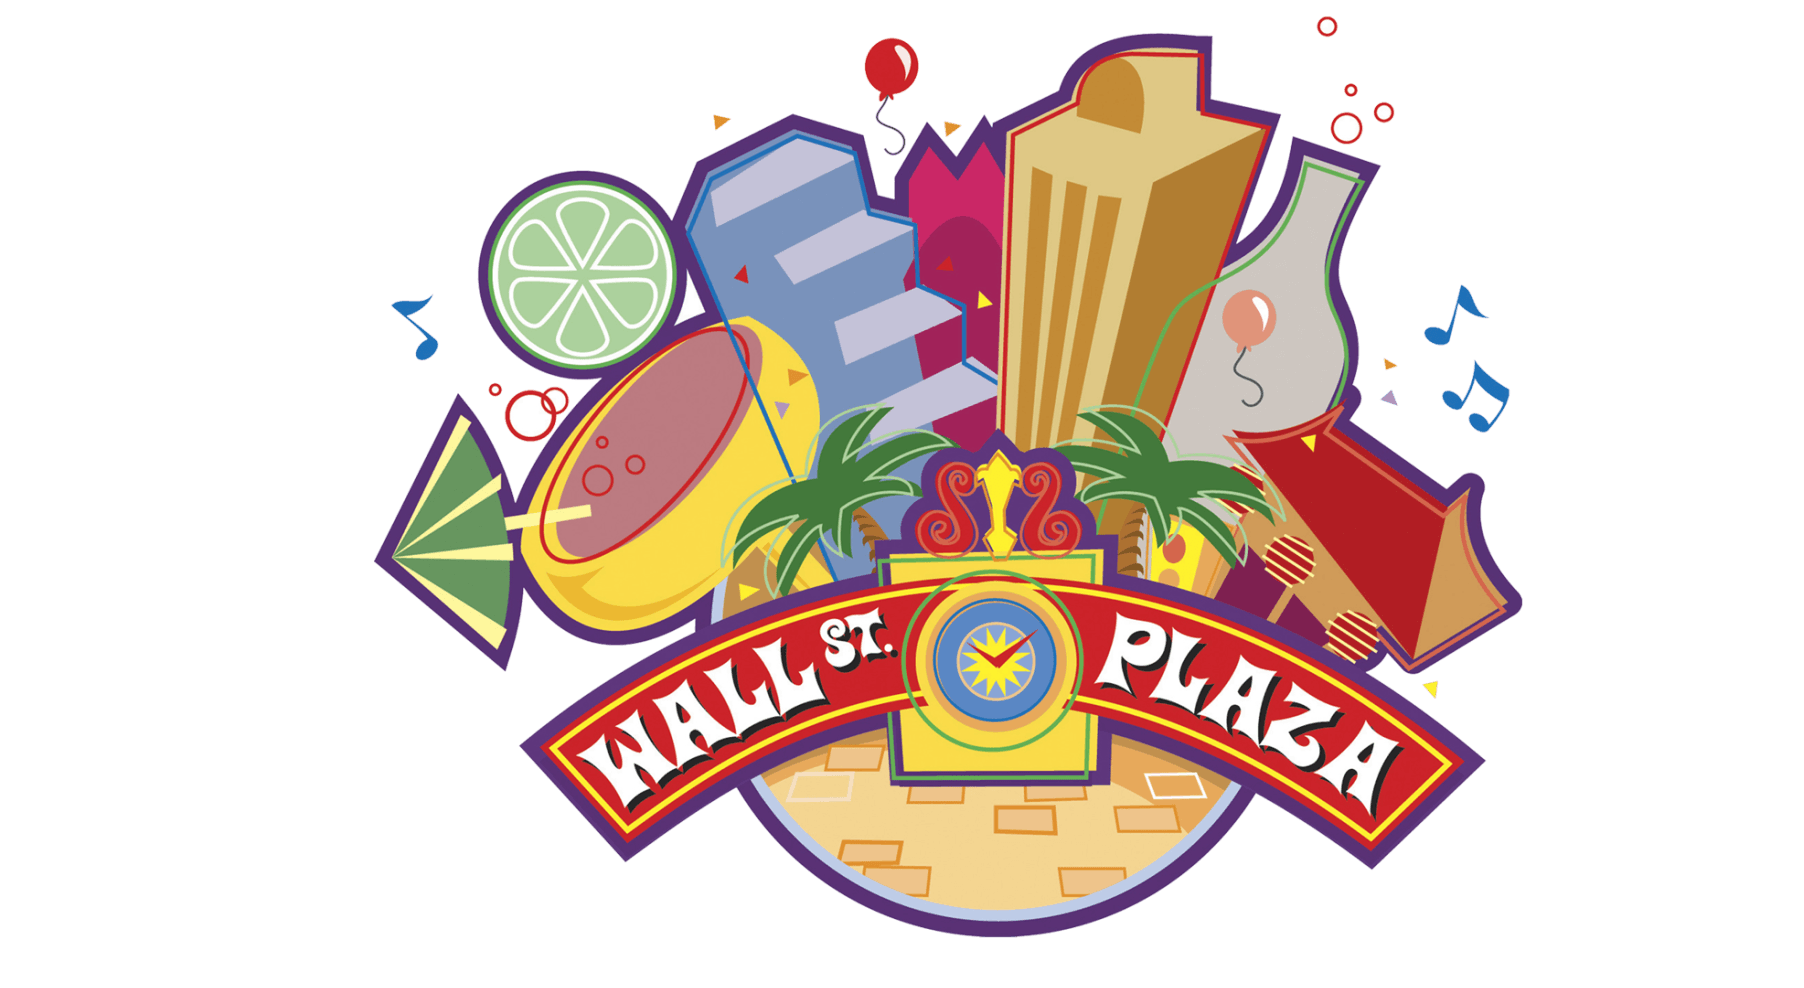 Wall Street Plaza Logo, Best Orlando Downtown Party, 